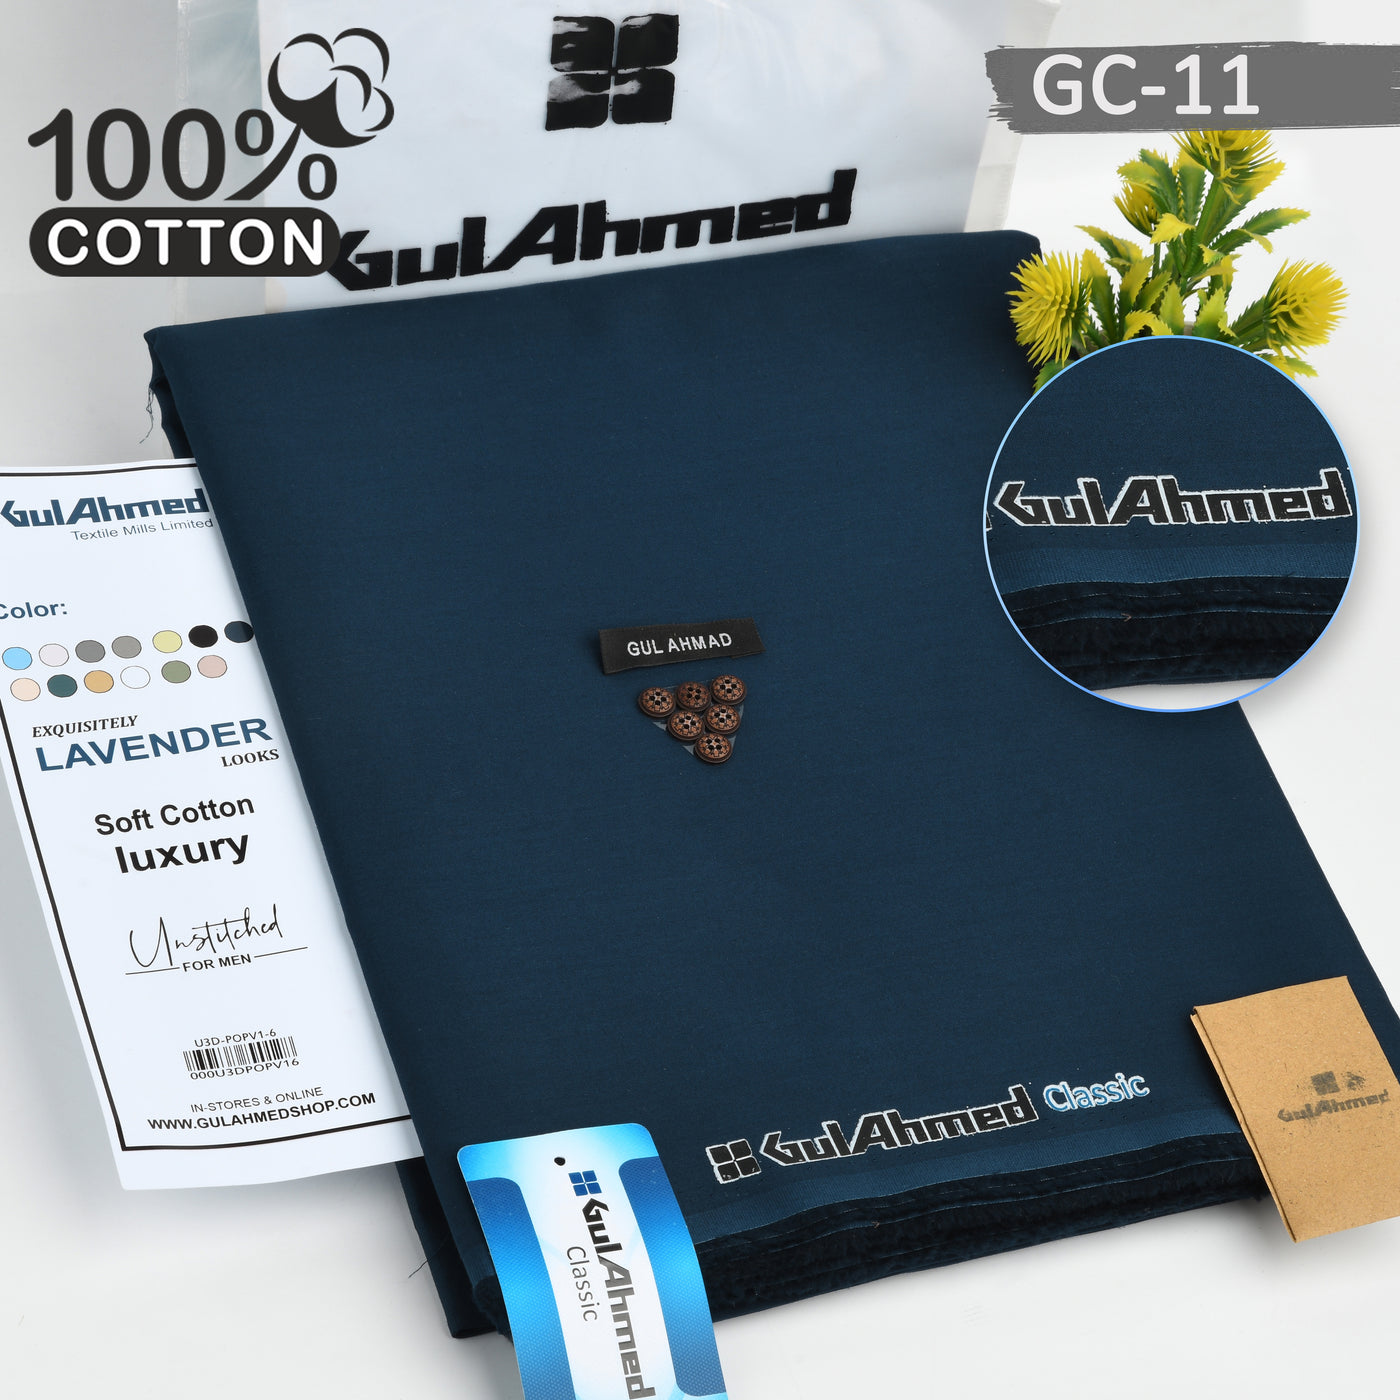 Gul Ahmed Cotton GC-11